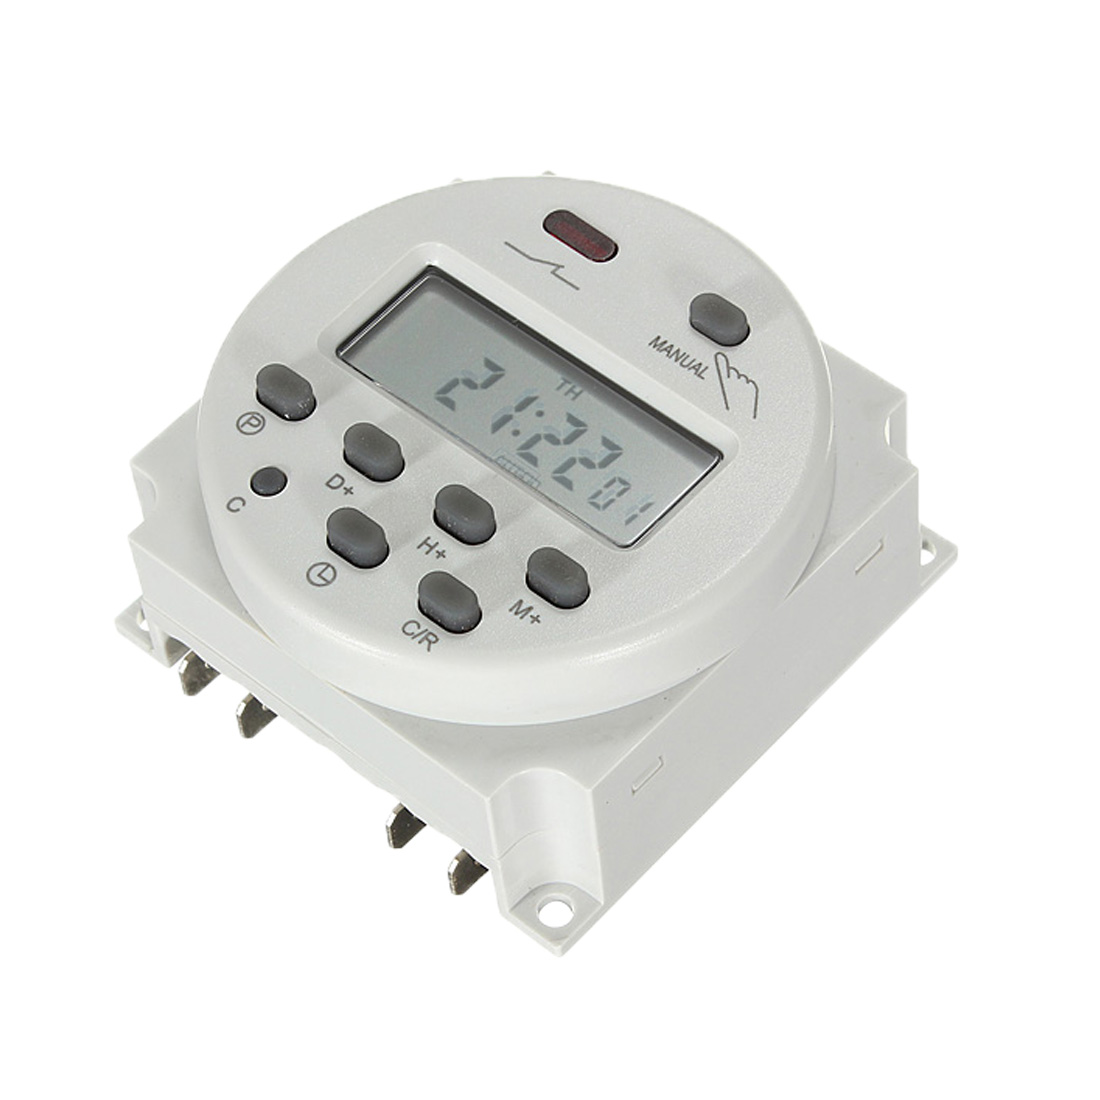 Loskii-CN101A-12V-36V-110V-220V-Programmable-Digital-LCD-Power-Timer-Switch-Relay-16A-Timers-1298598